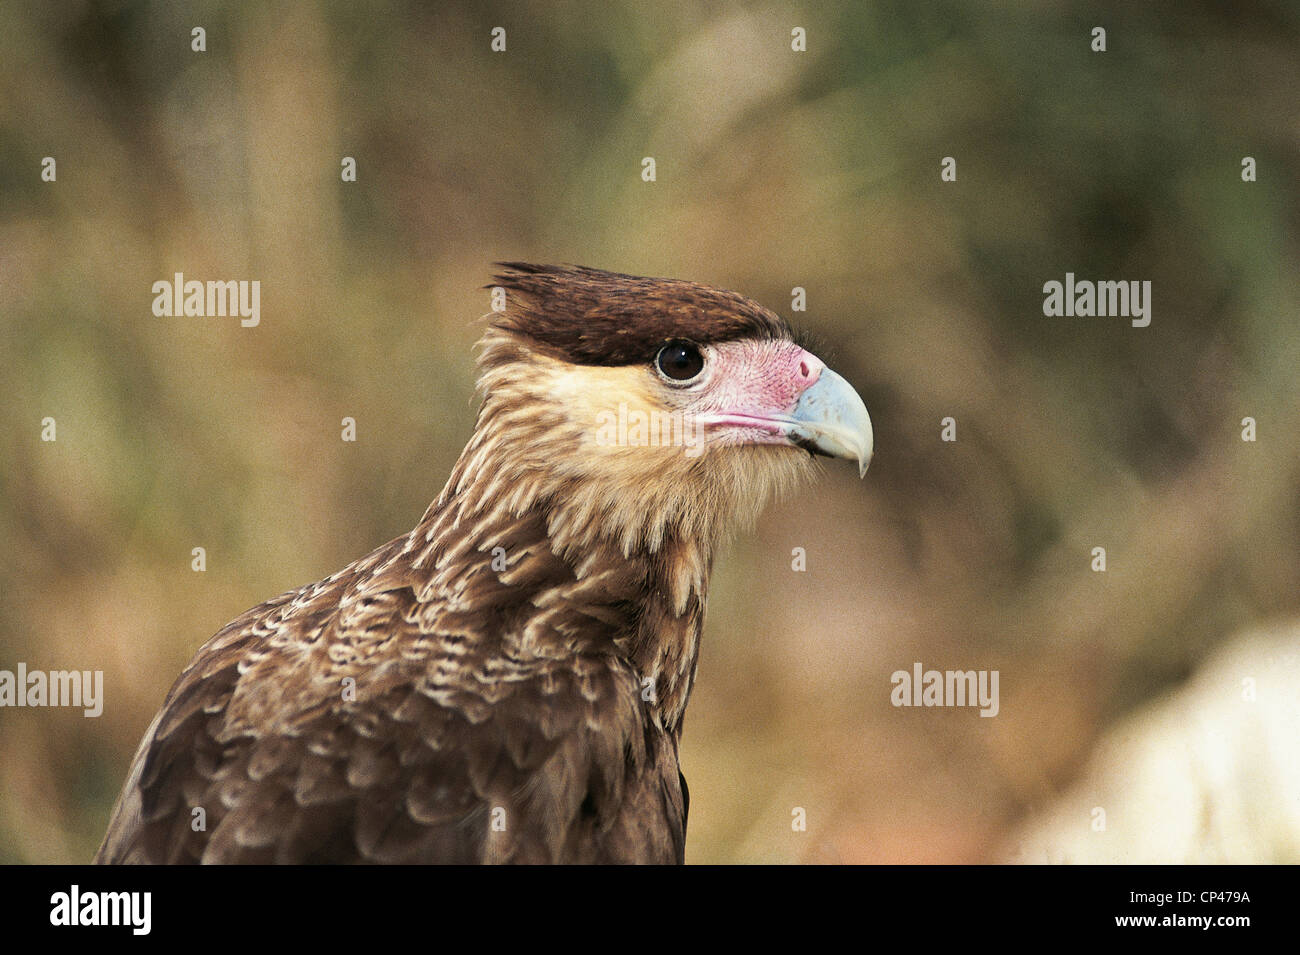 Paraguay - Chaco - Bird Falconiformes Fotografía de stock - Alamy